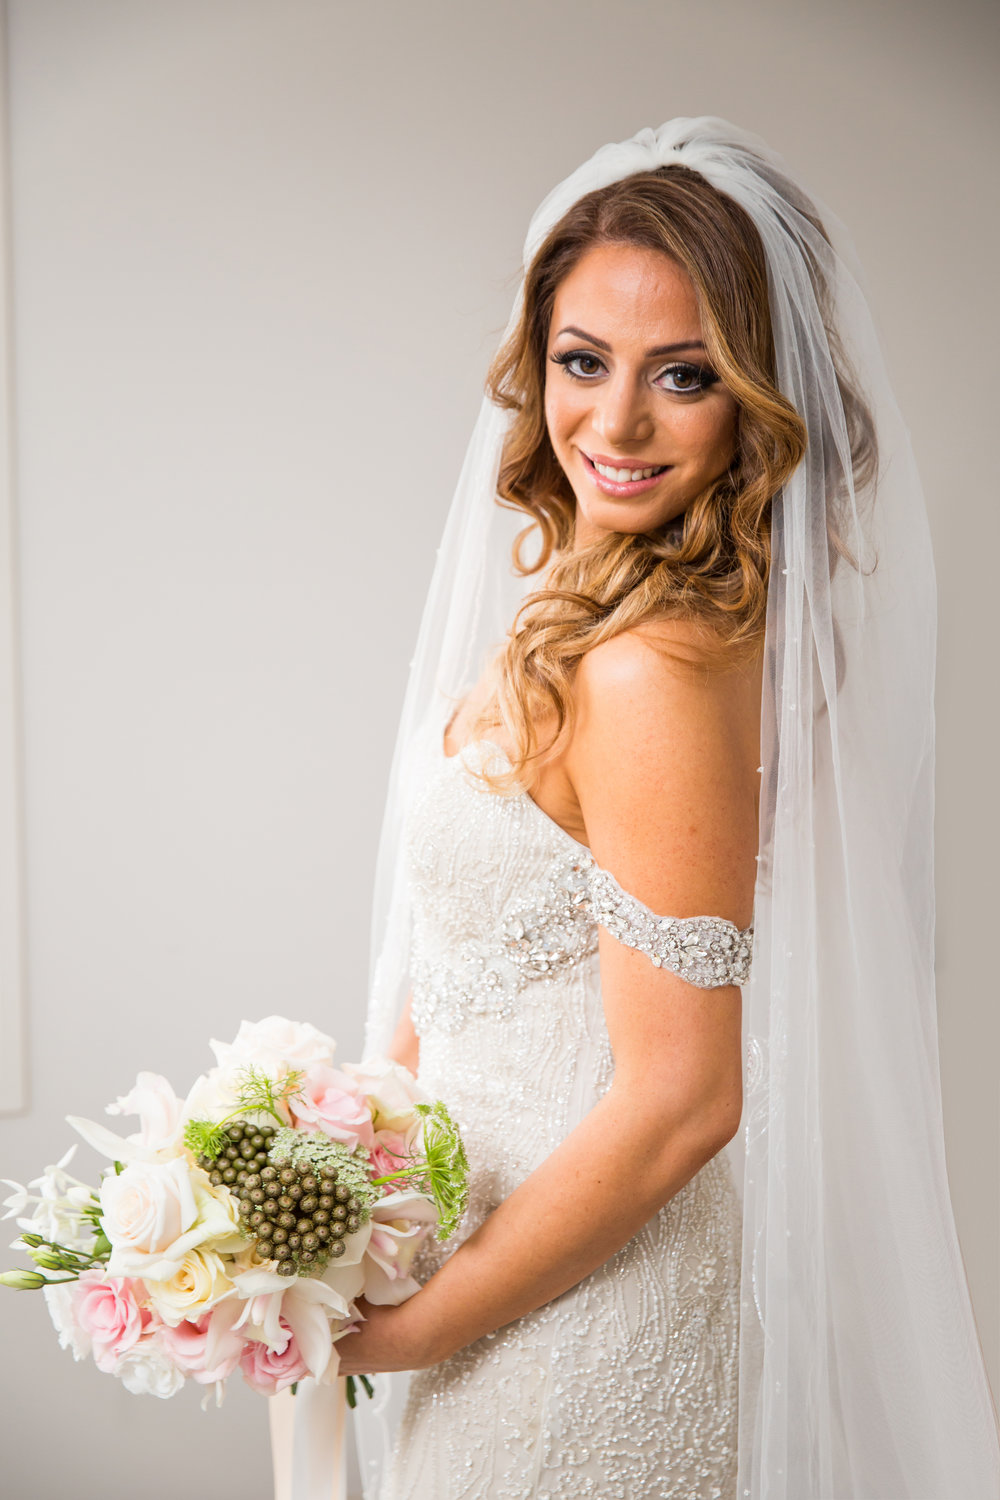 La Sposa Beaded Wedding Dress - A Curzon Hall Wedding - T-One Photography